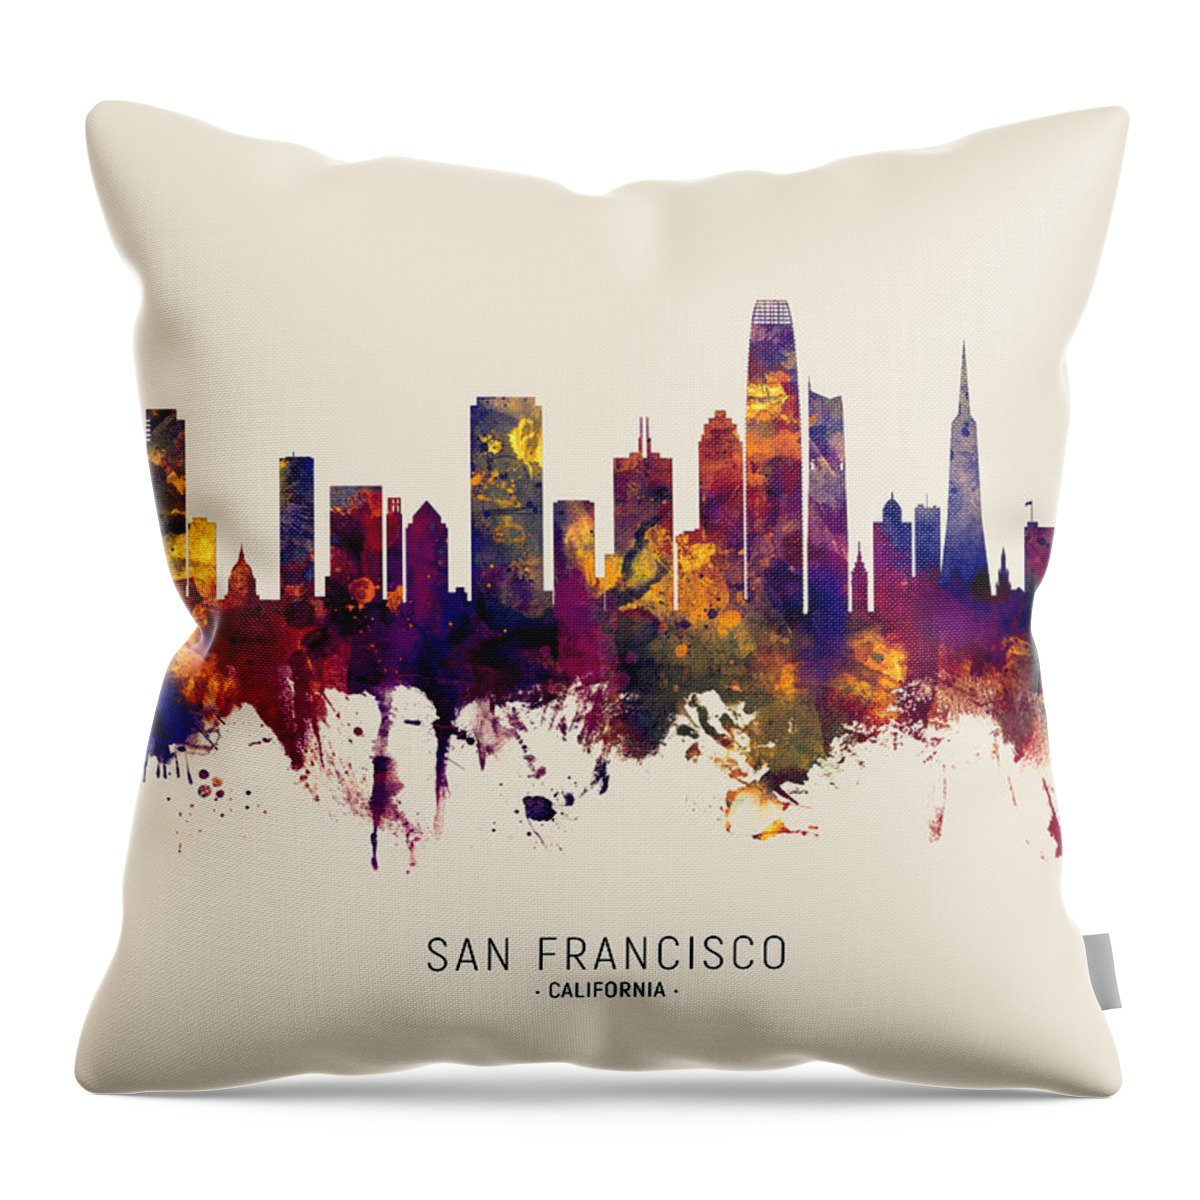 San Francisco Throw Pillow featuring the digital art San Francisco California Skyline #35 by Michael Tompsett